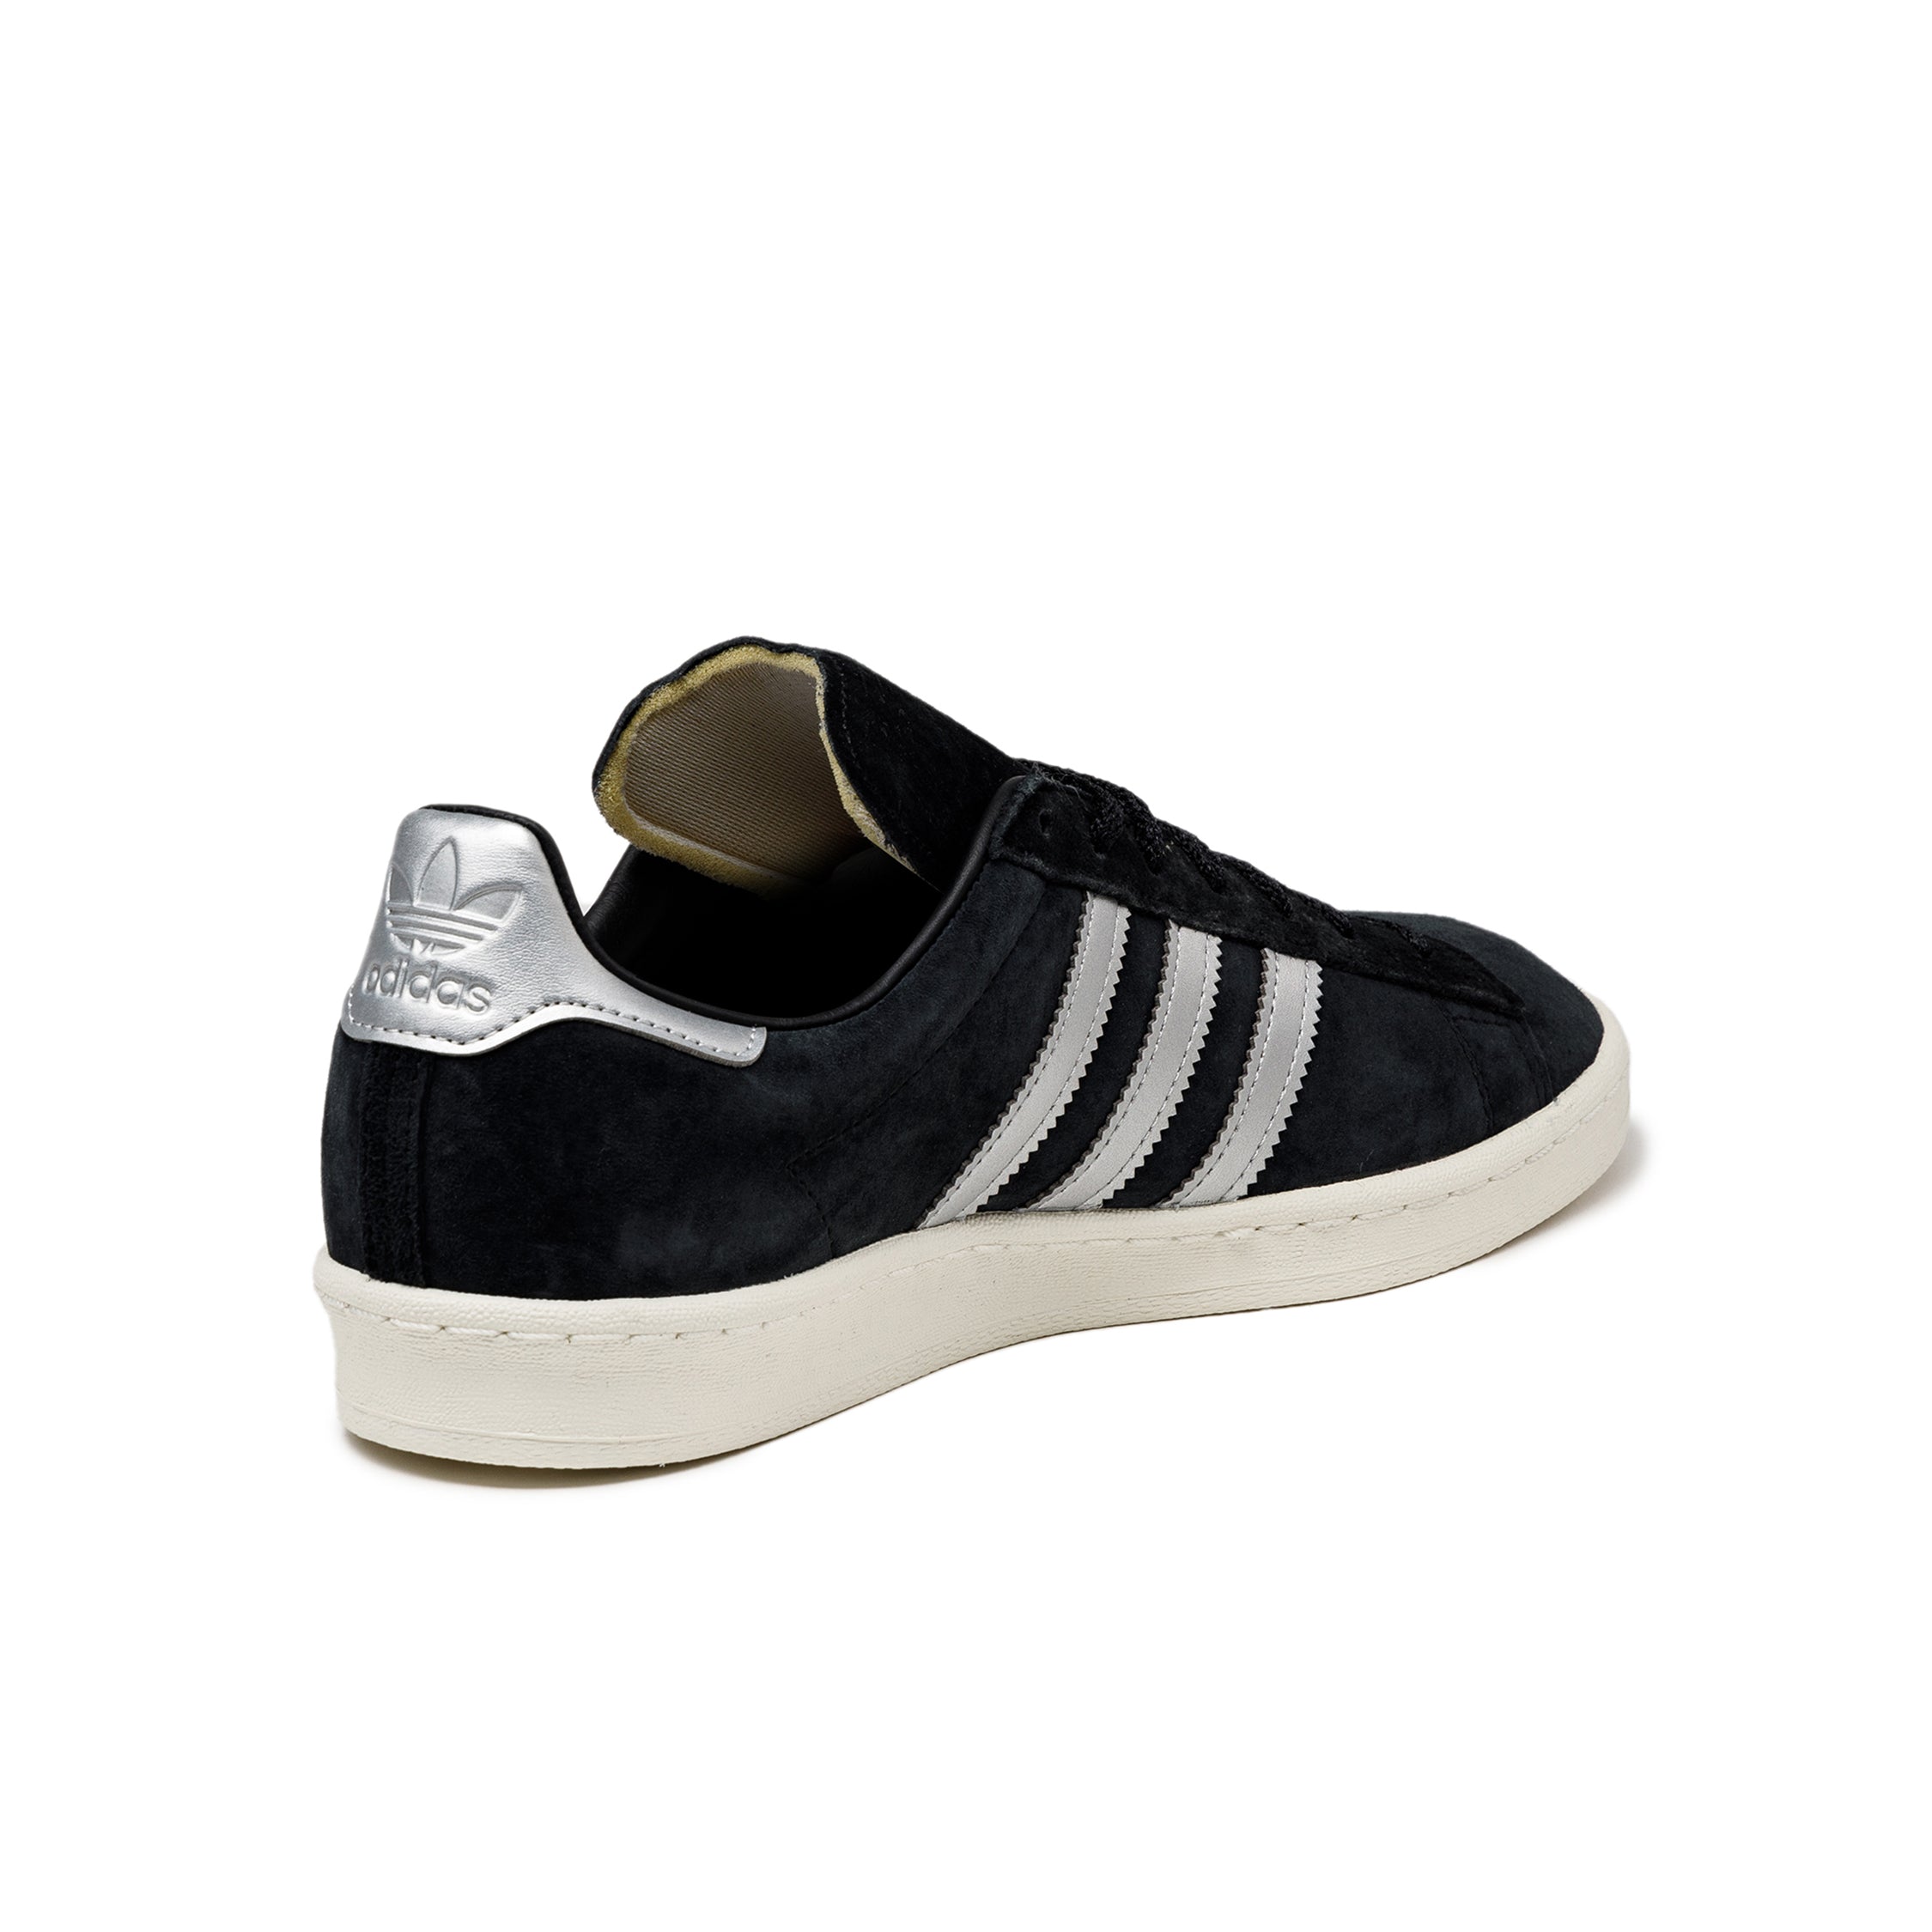 Adidas Campus 80s » Buy online now!